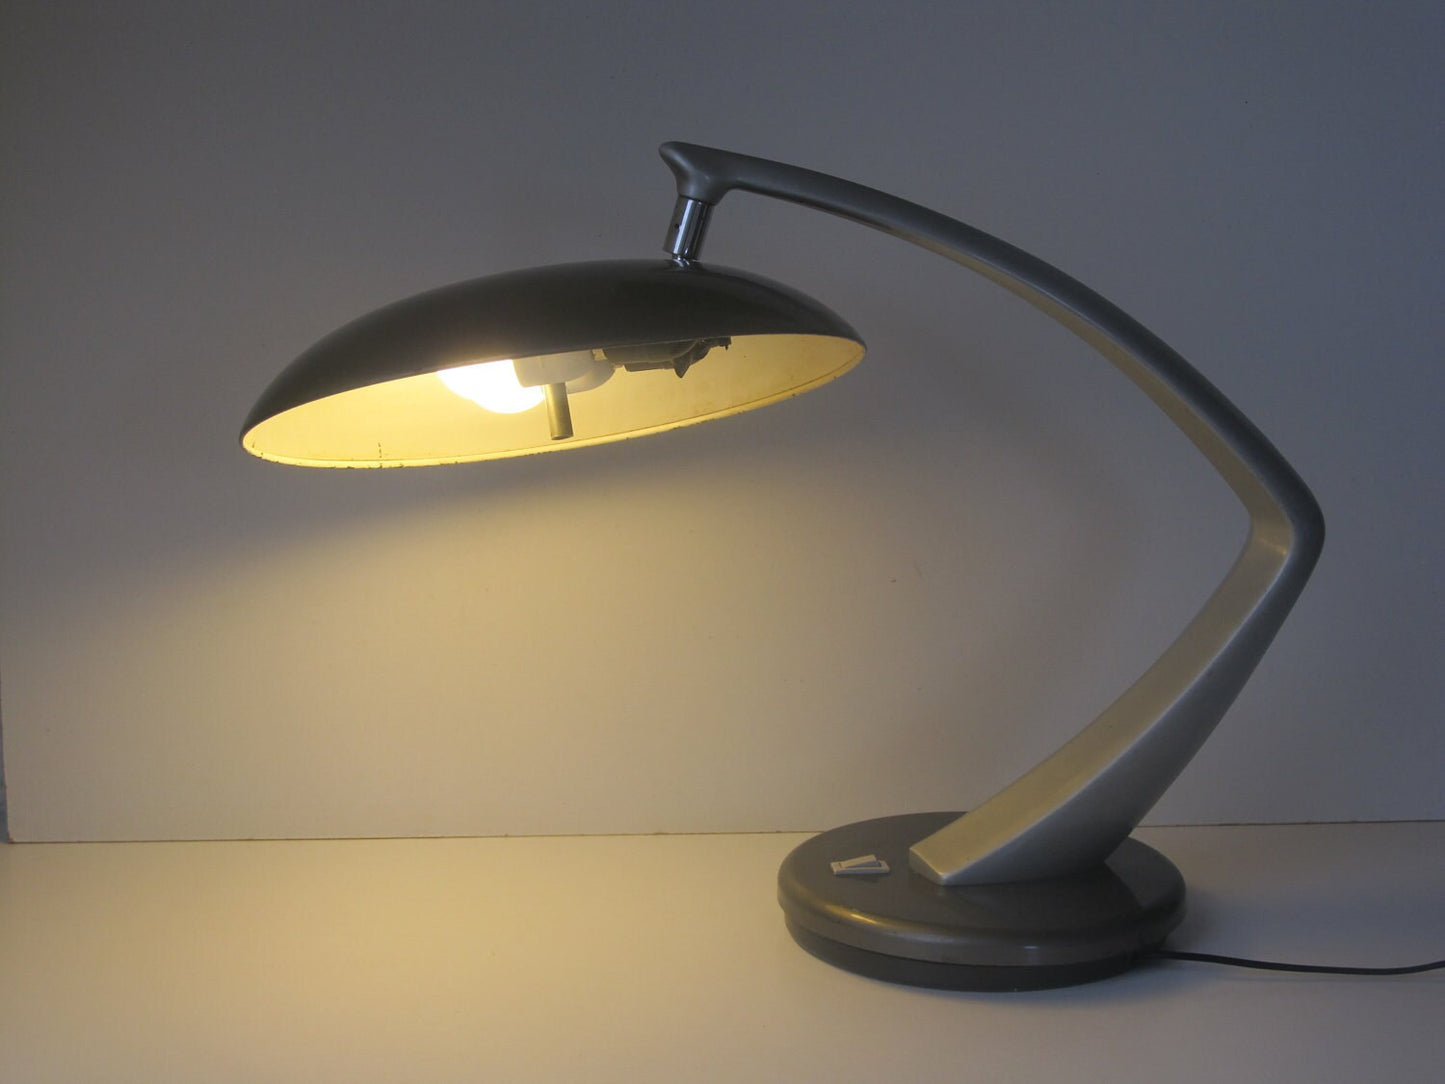 Fase Boomerang Madrid Spain, Reserved for R. Vintage Retro desk table lamp